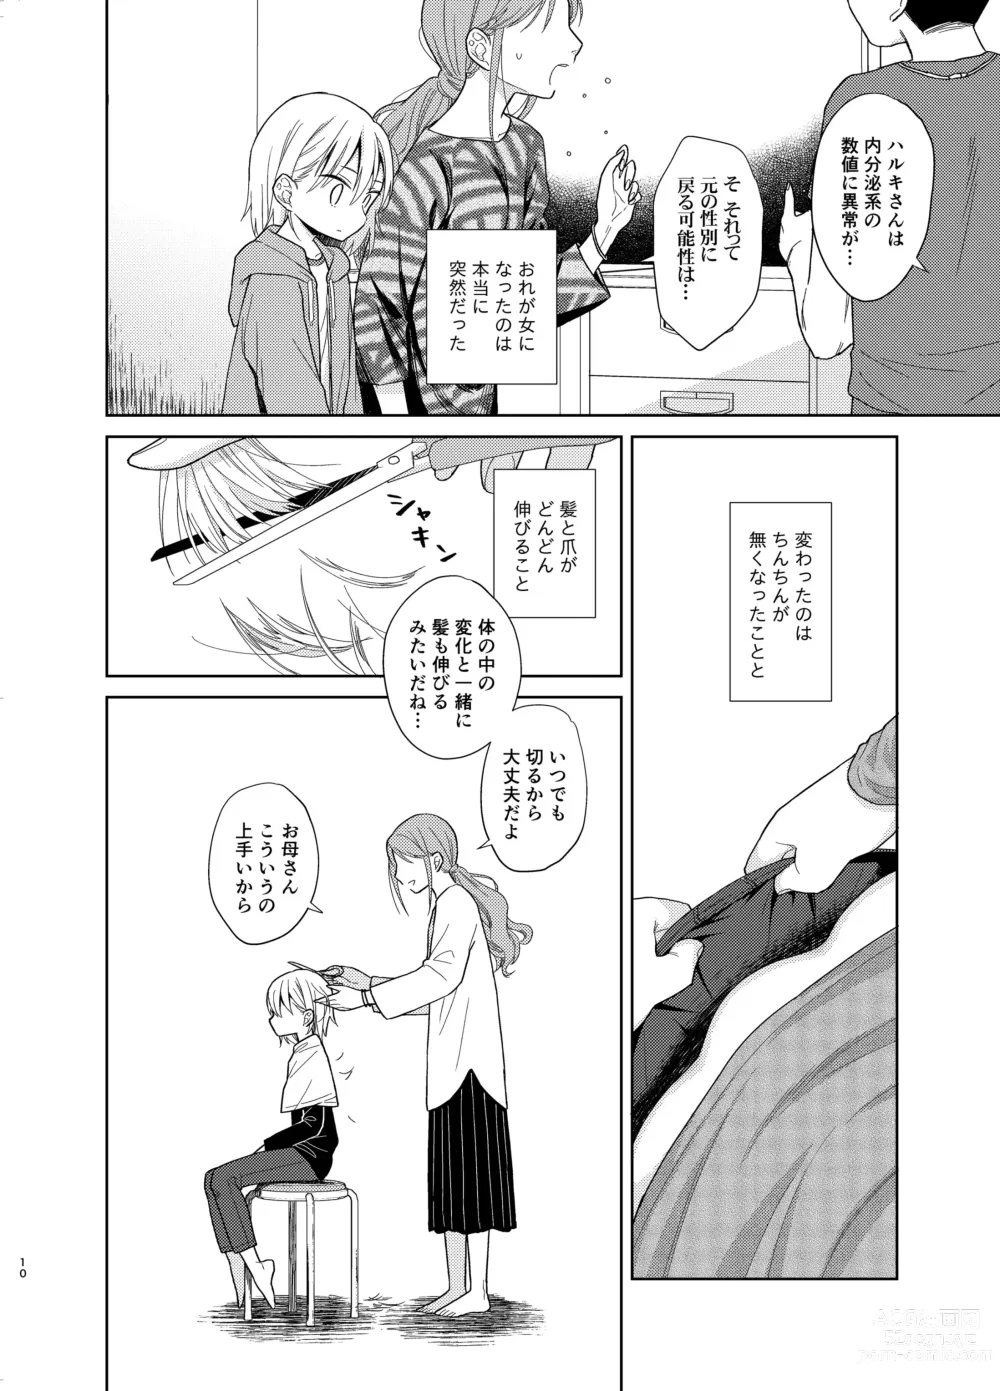 Page 9 of doujinshi TS Shoujo Haruki-kun 5